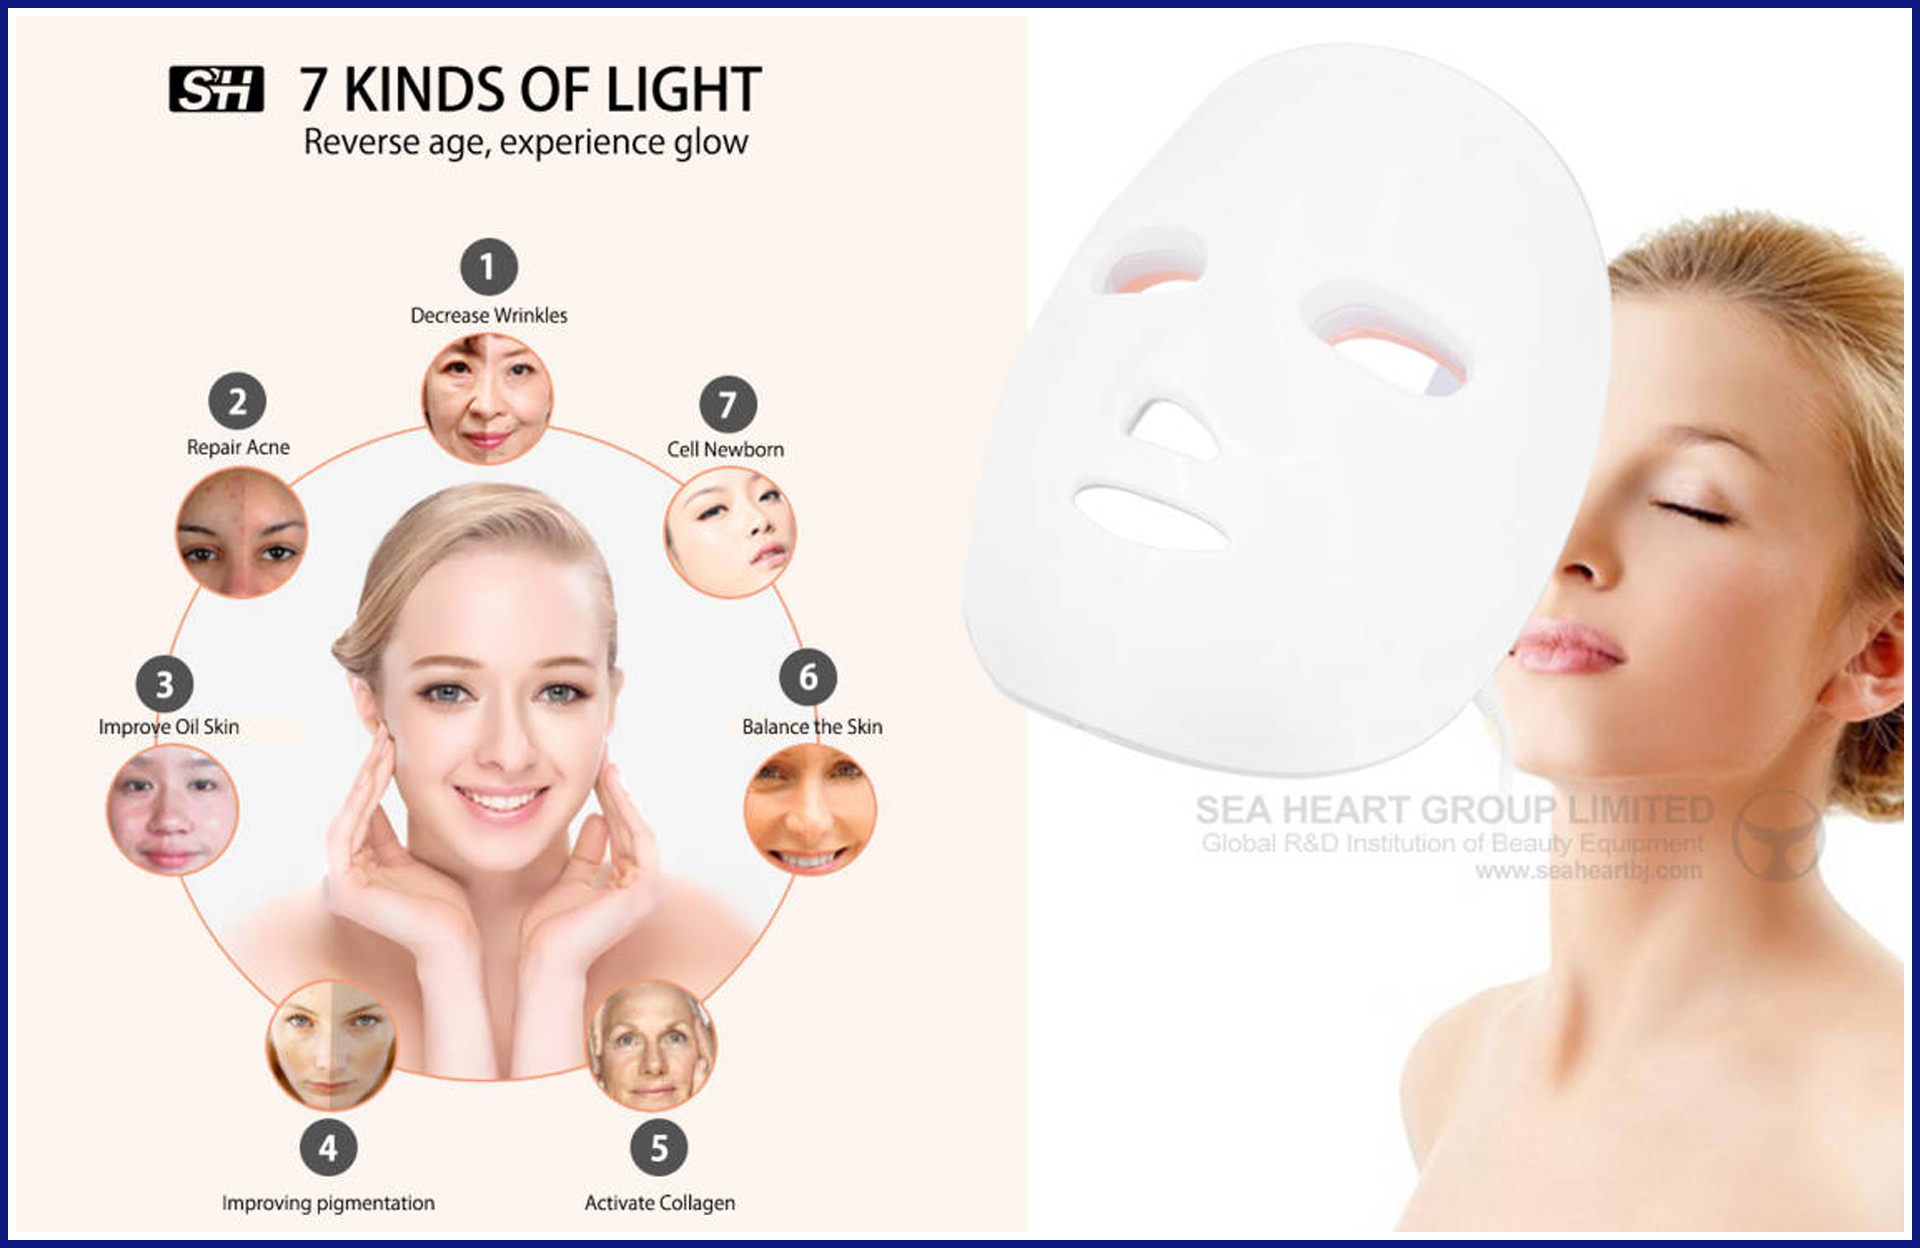 Do led facial masks work?